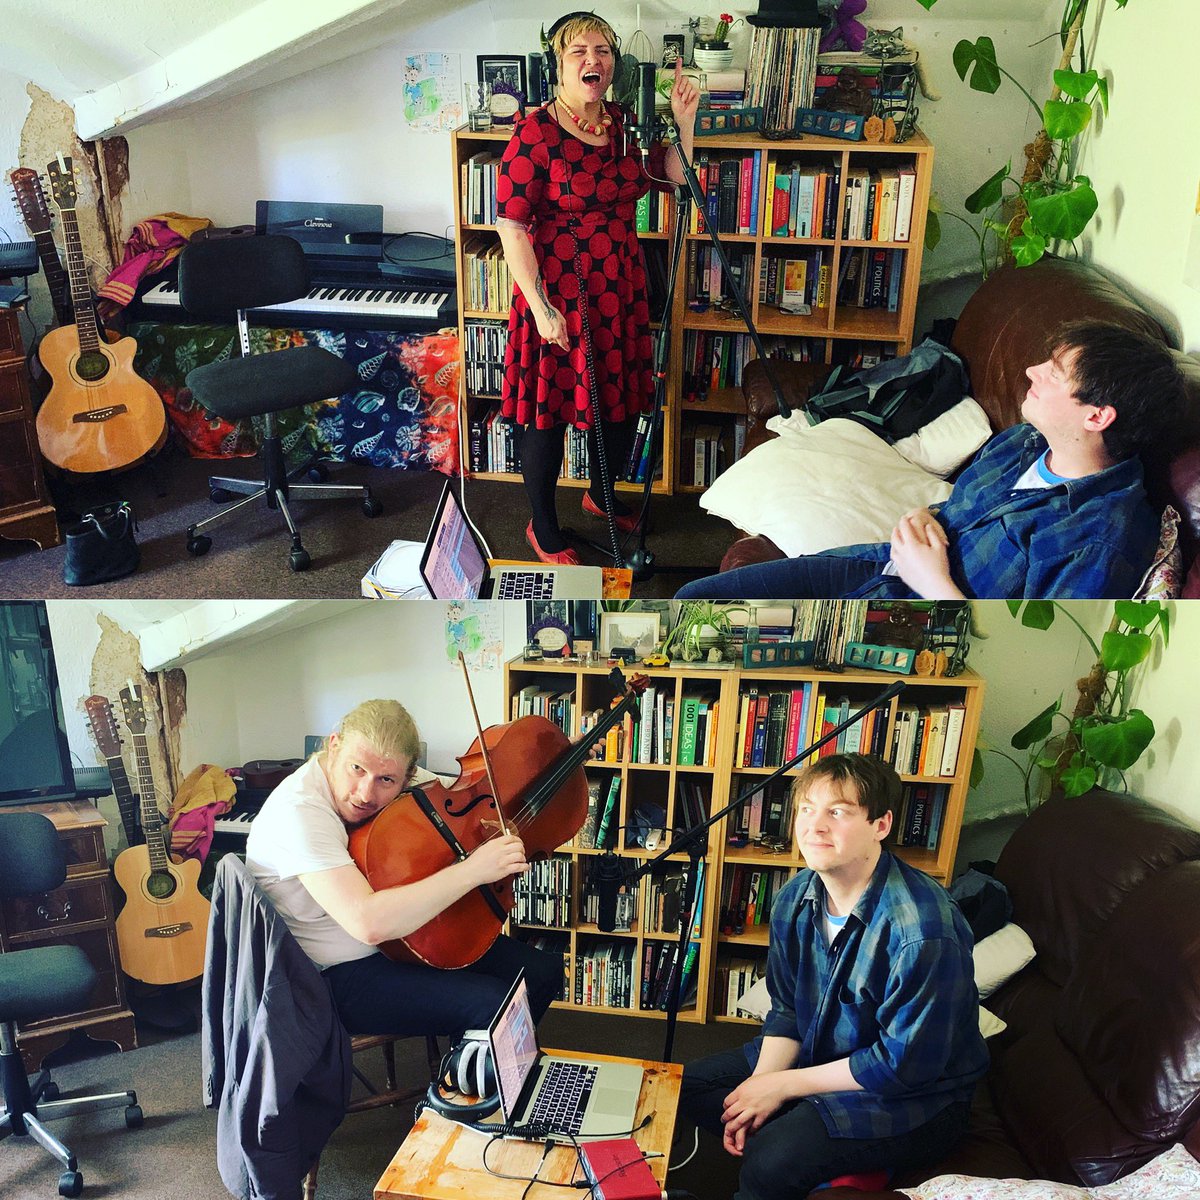 Recording @moxie_uk music today!
.
#music #recording #vocals #cello #musicsingle #musicep #backingvocals #homestudio #studio #debutsingle #ep #record #comingsoon #musicians #musicianslife #homerecording